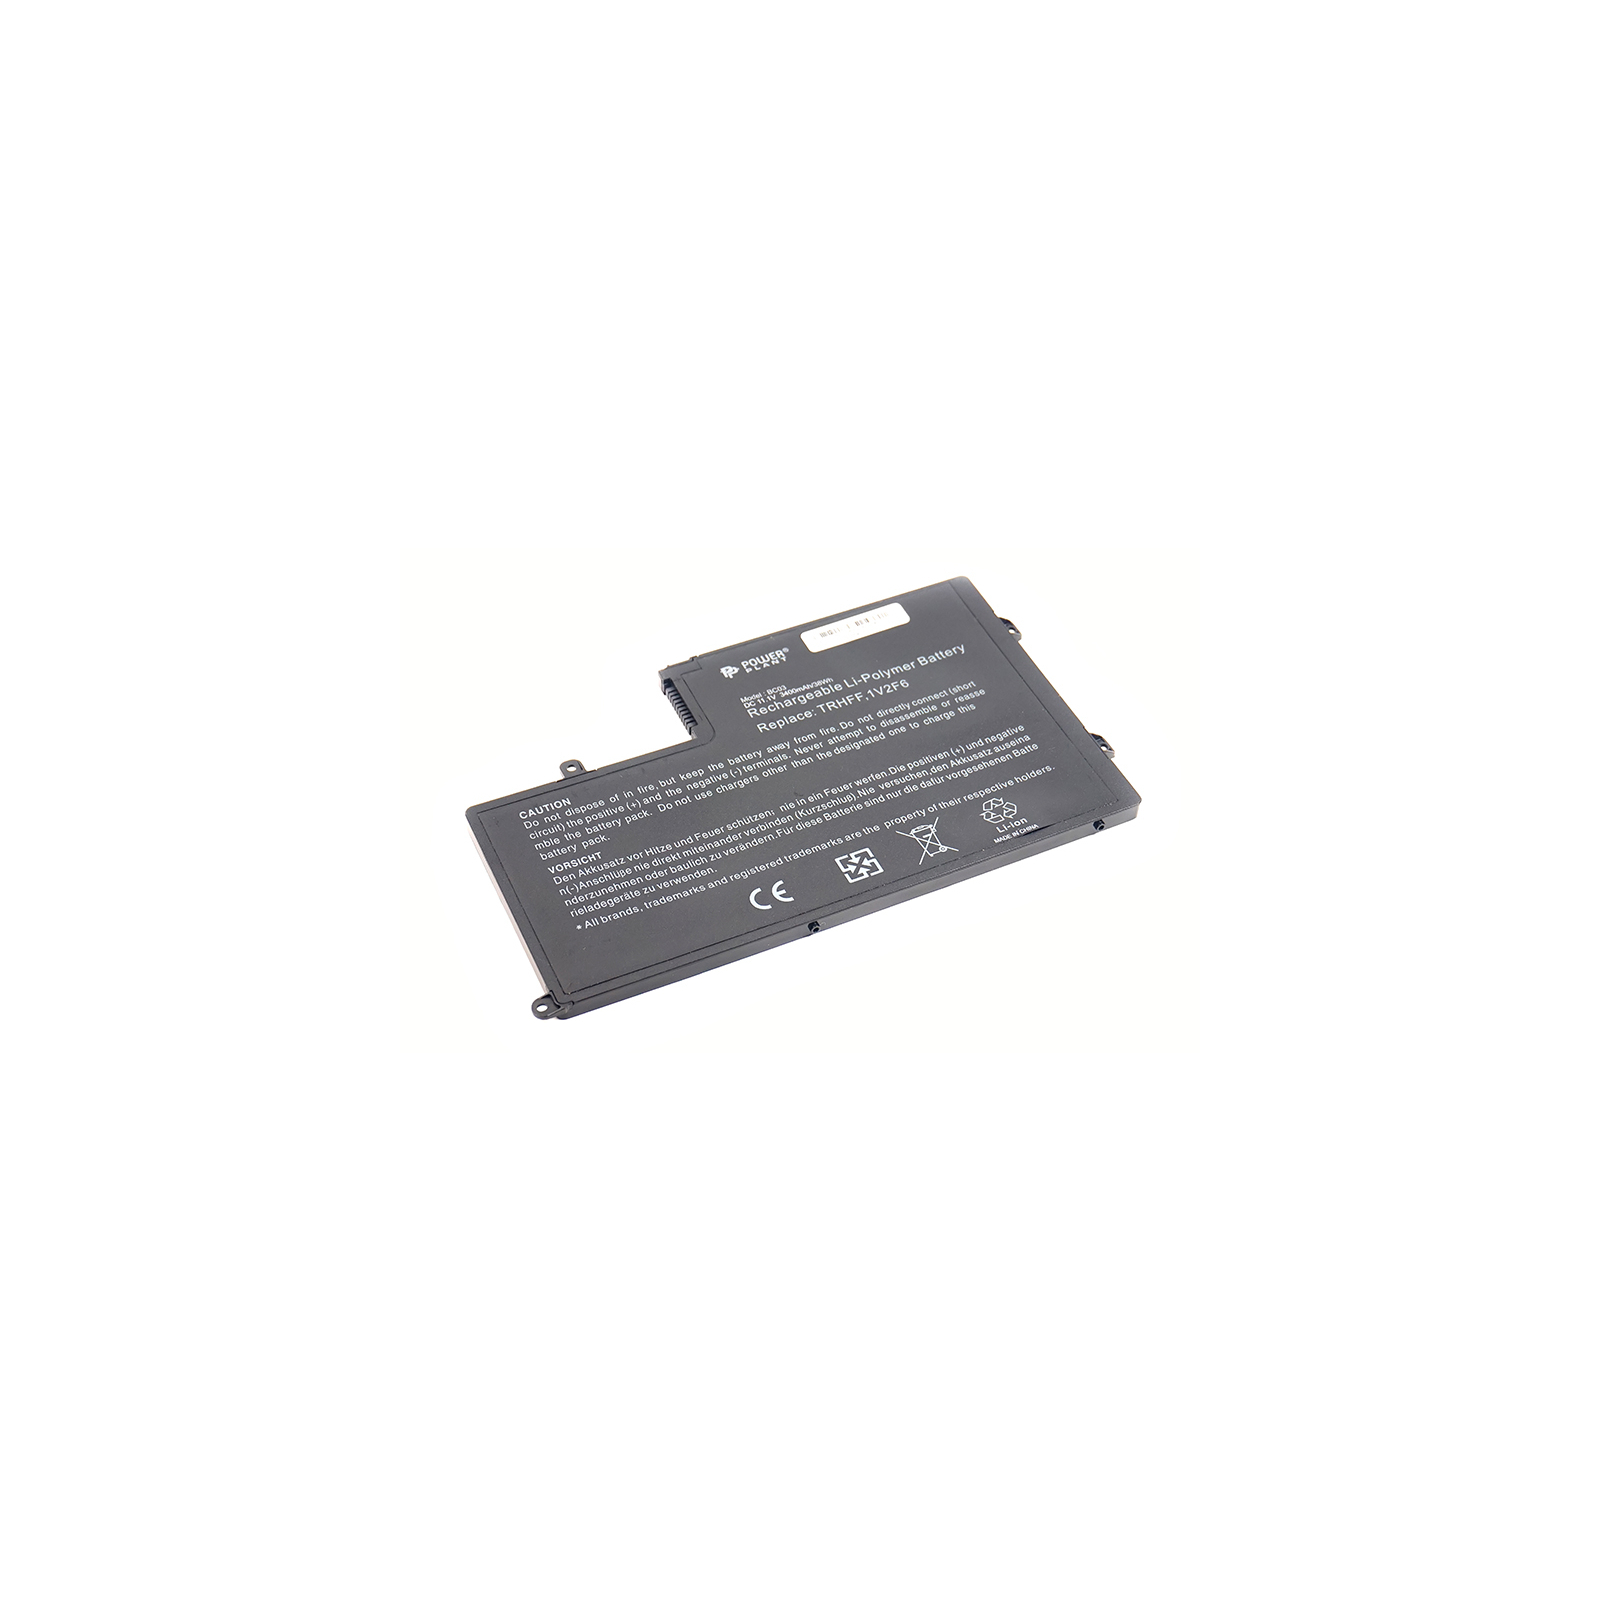 Аккумулятор для ноутбука DELL Inspiron 15-5547 Series (TRHFF, DL5547PC) 11.1V 3400mAh PowerPlant (NB440580) изображение 2